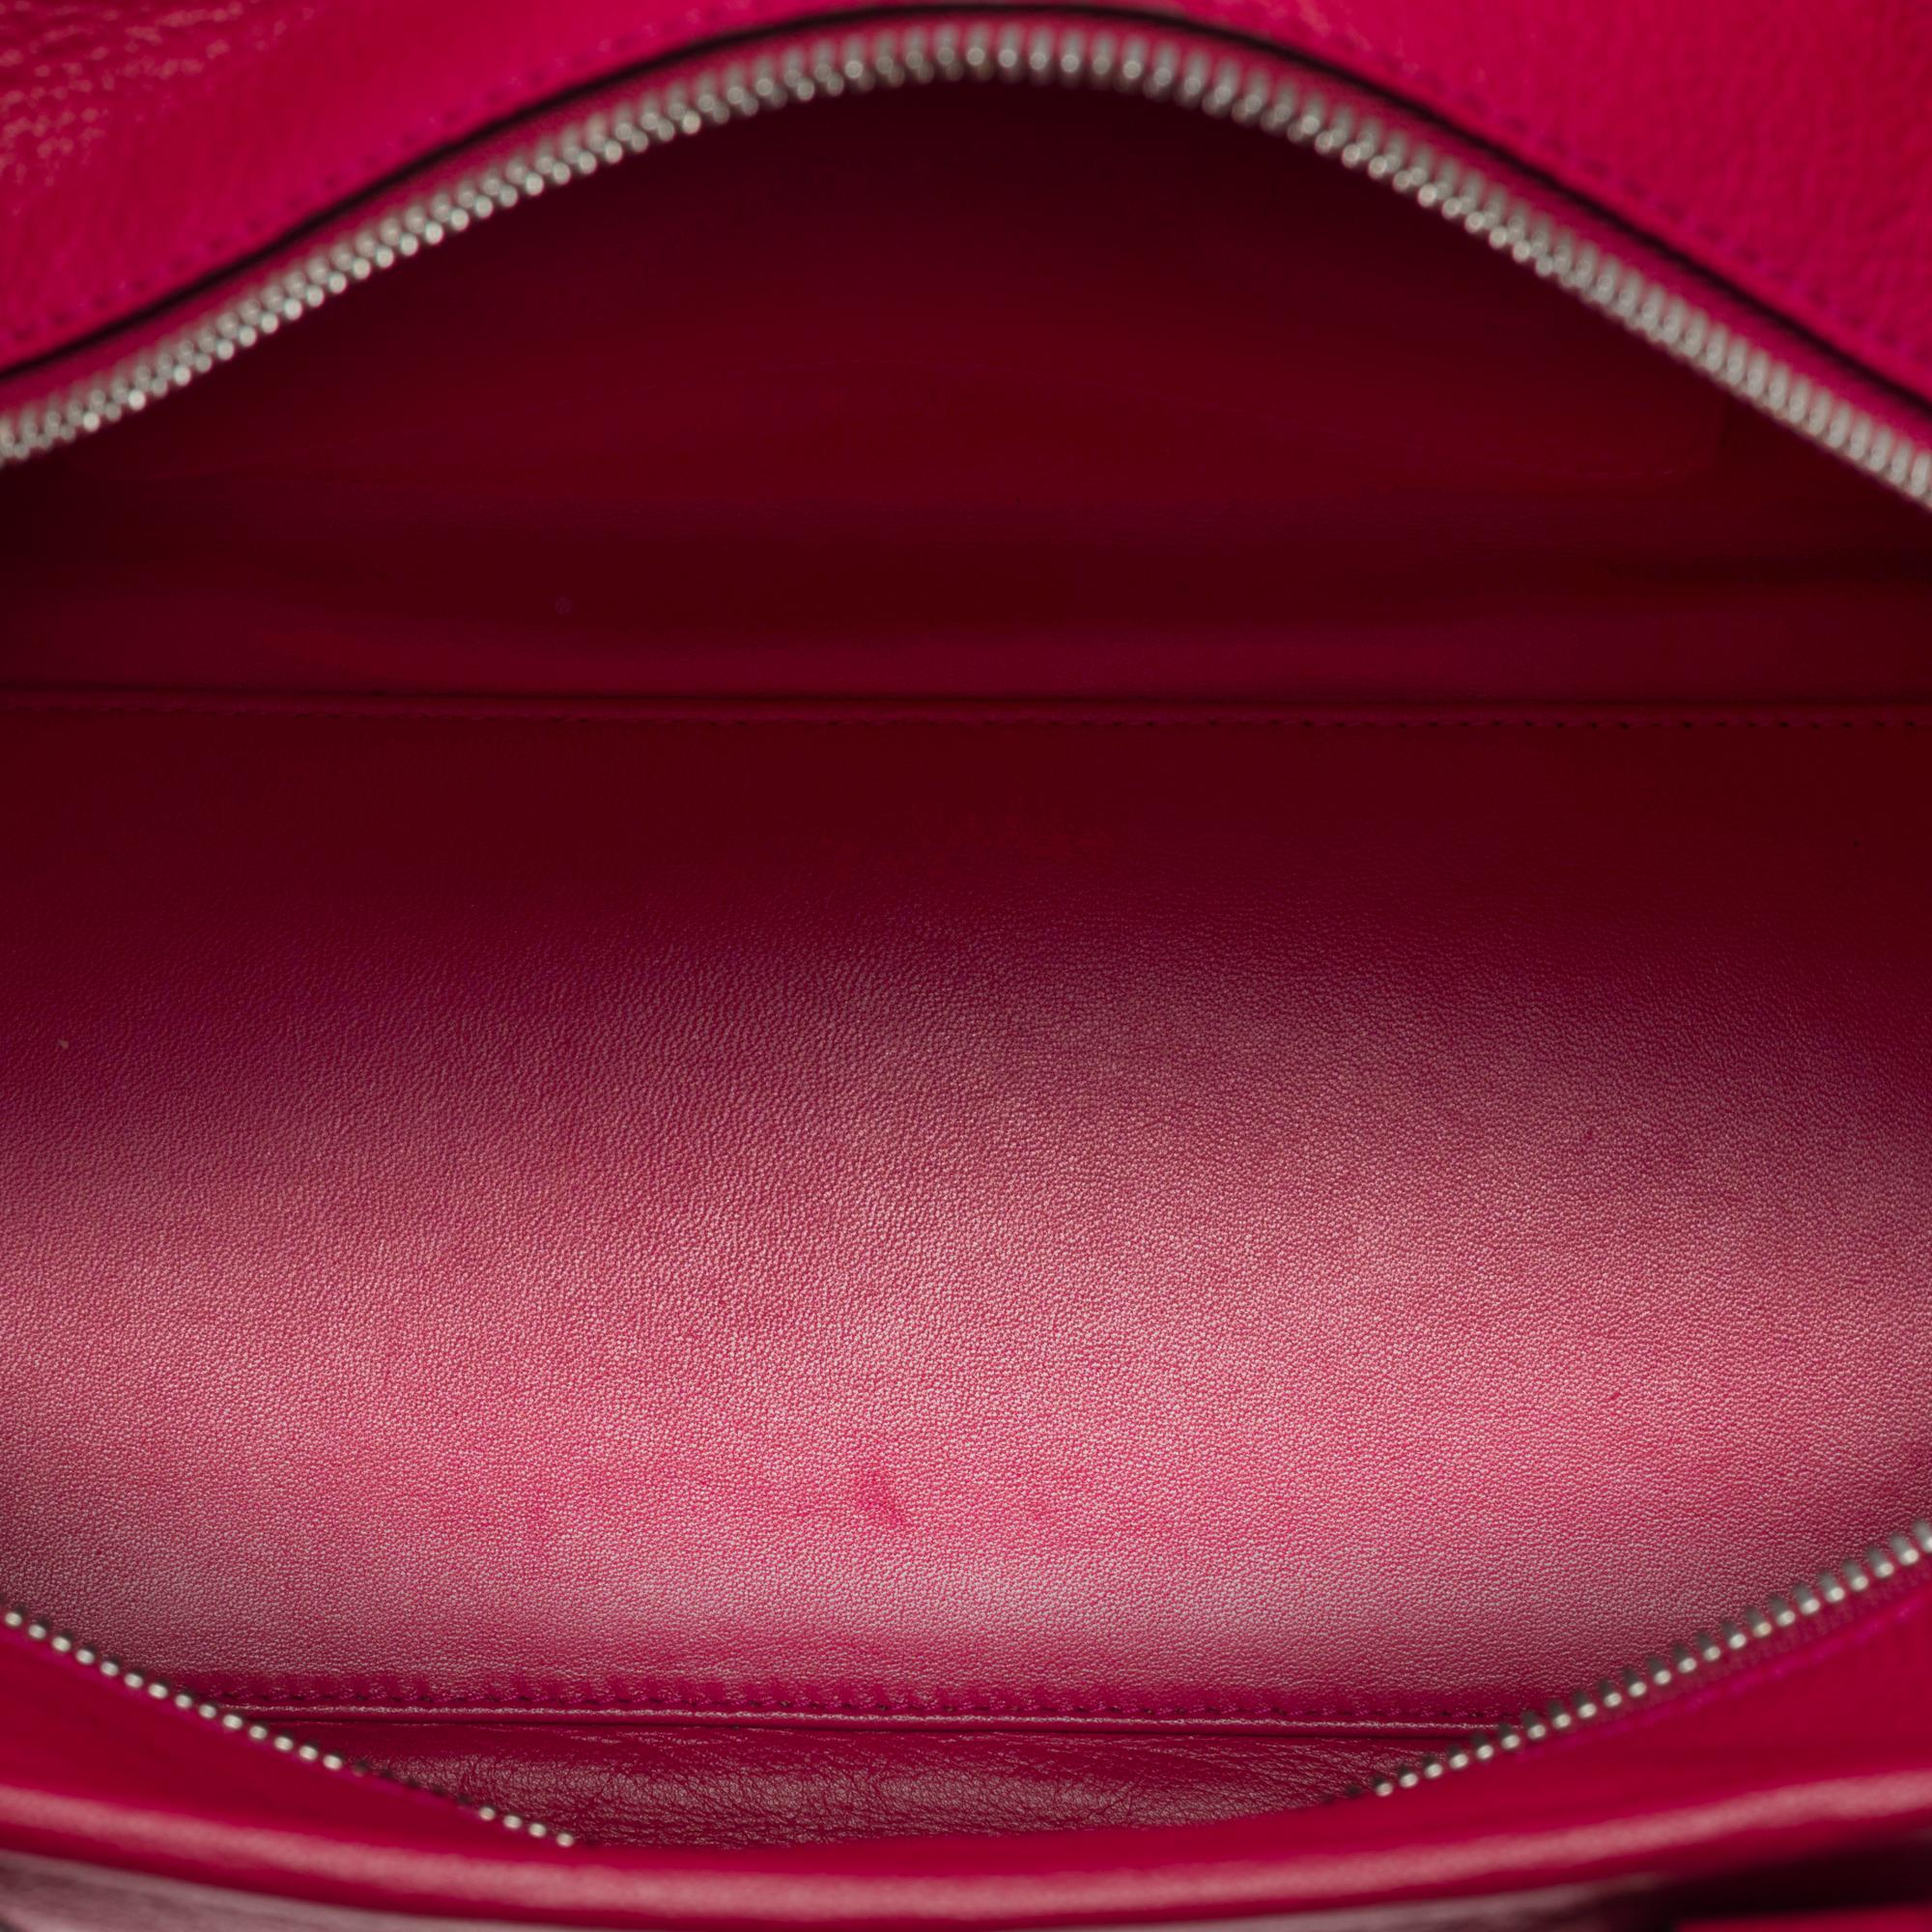 Delightful Loewe Amazona 36 (GM) handbag in red leather, SHW For Sale 4